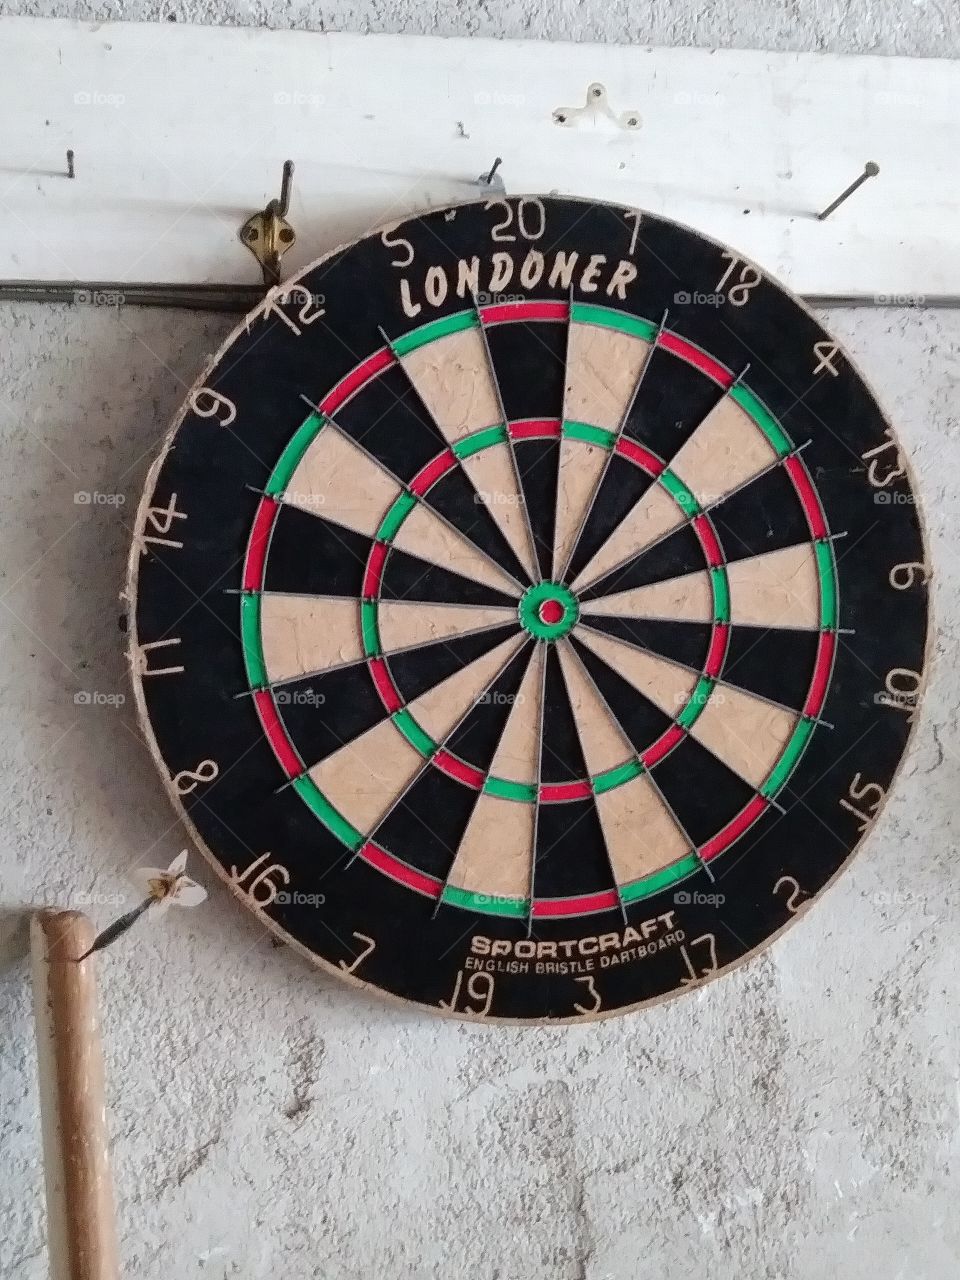 bullseye! the broom handles gotta count for somethin ? #darts #garagefun